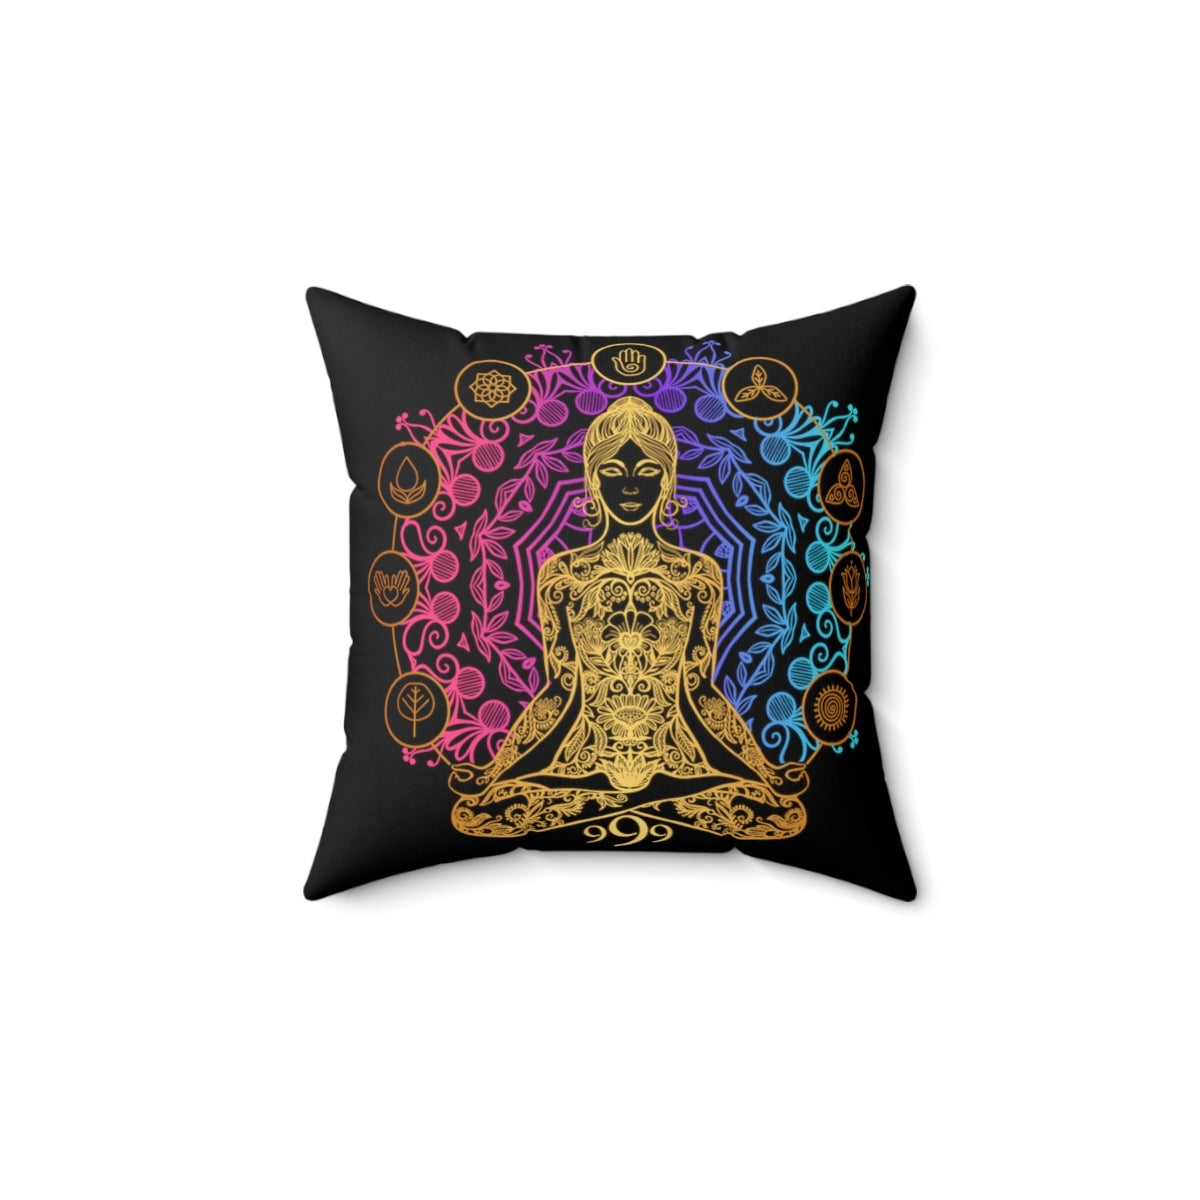 Yoga Spiritual Meditation Spun Polyester Square Pillow - Release 999 Angel Number Printify